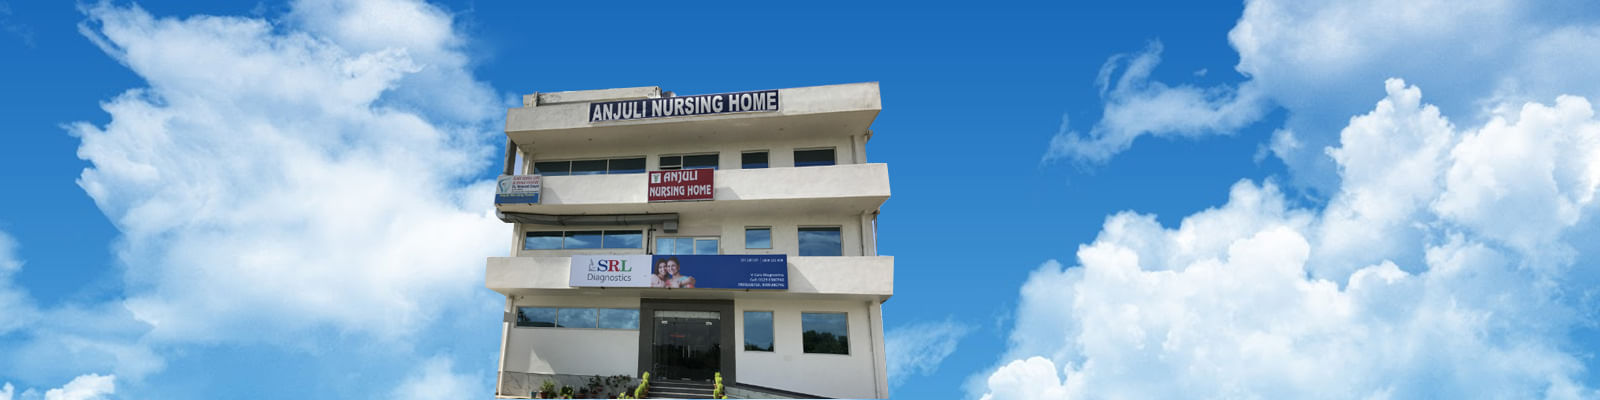 Anjuli Nursing Home